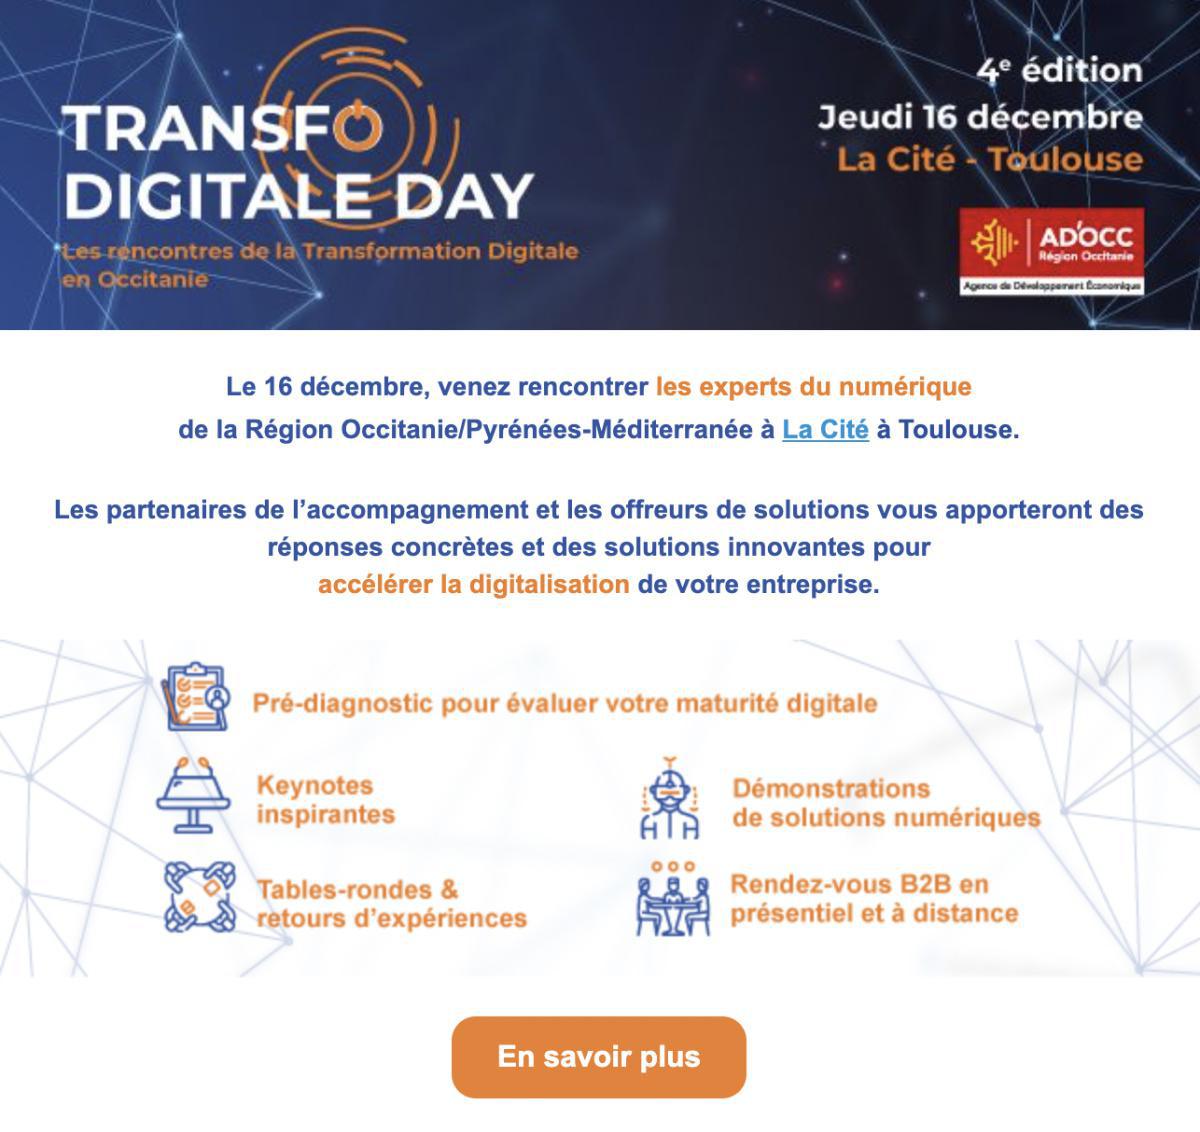 Save the date | Transfo Digitale Day | Jeudi 16 décembre